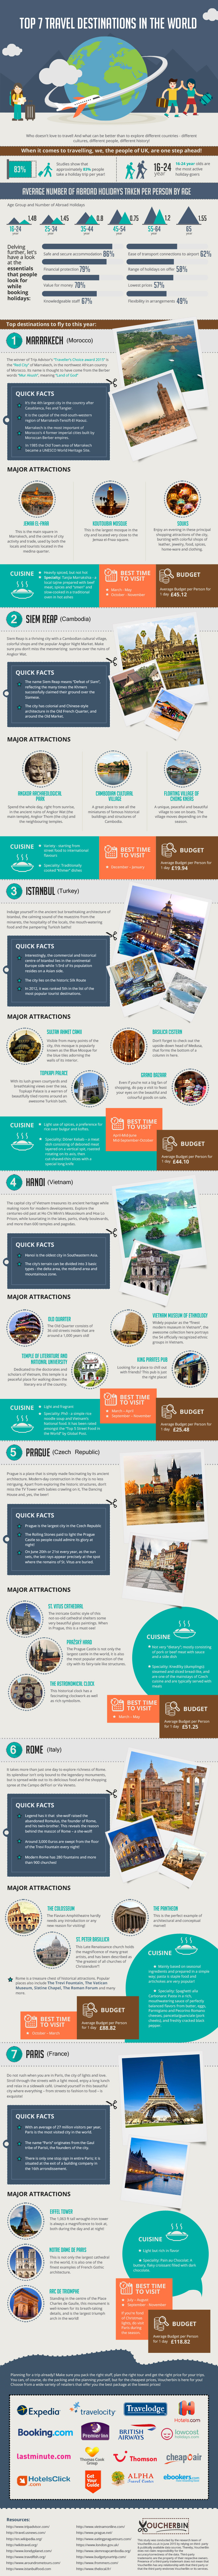 voucherbin-infographic-top-travel-destinations-in-the-world (1)